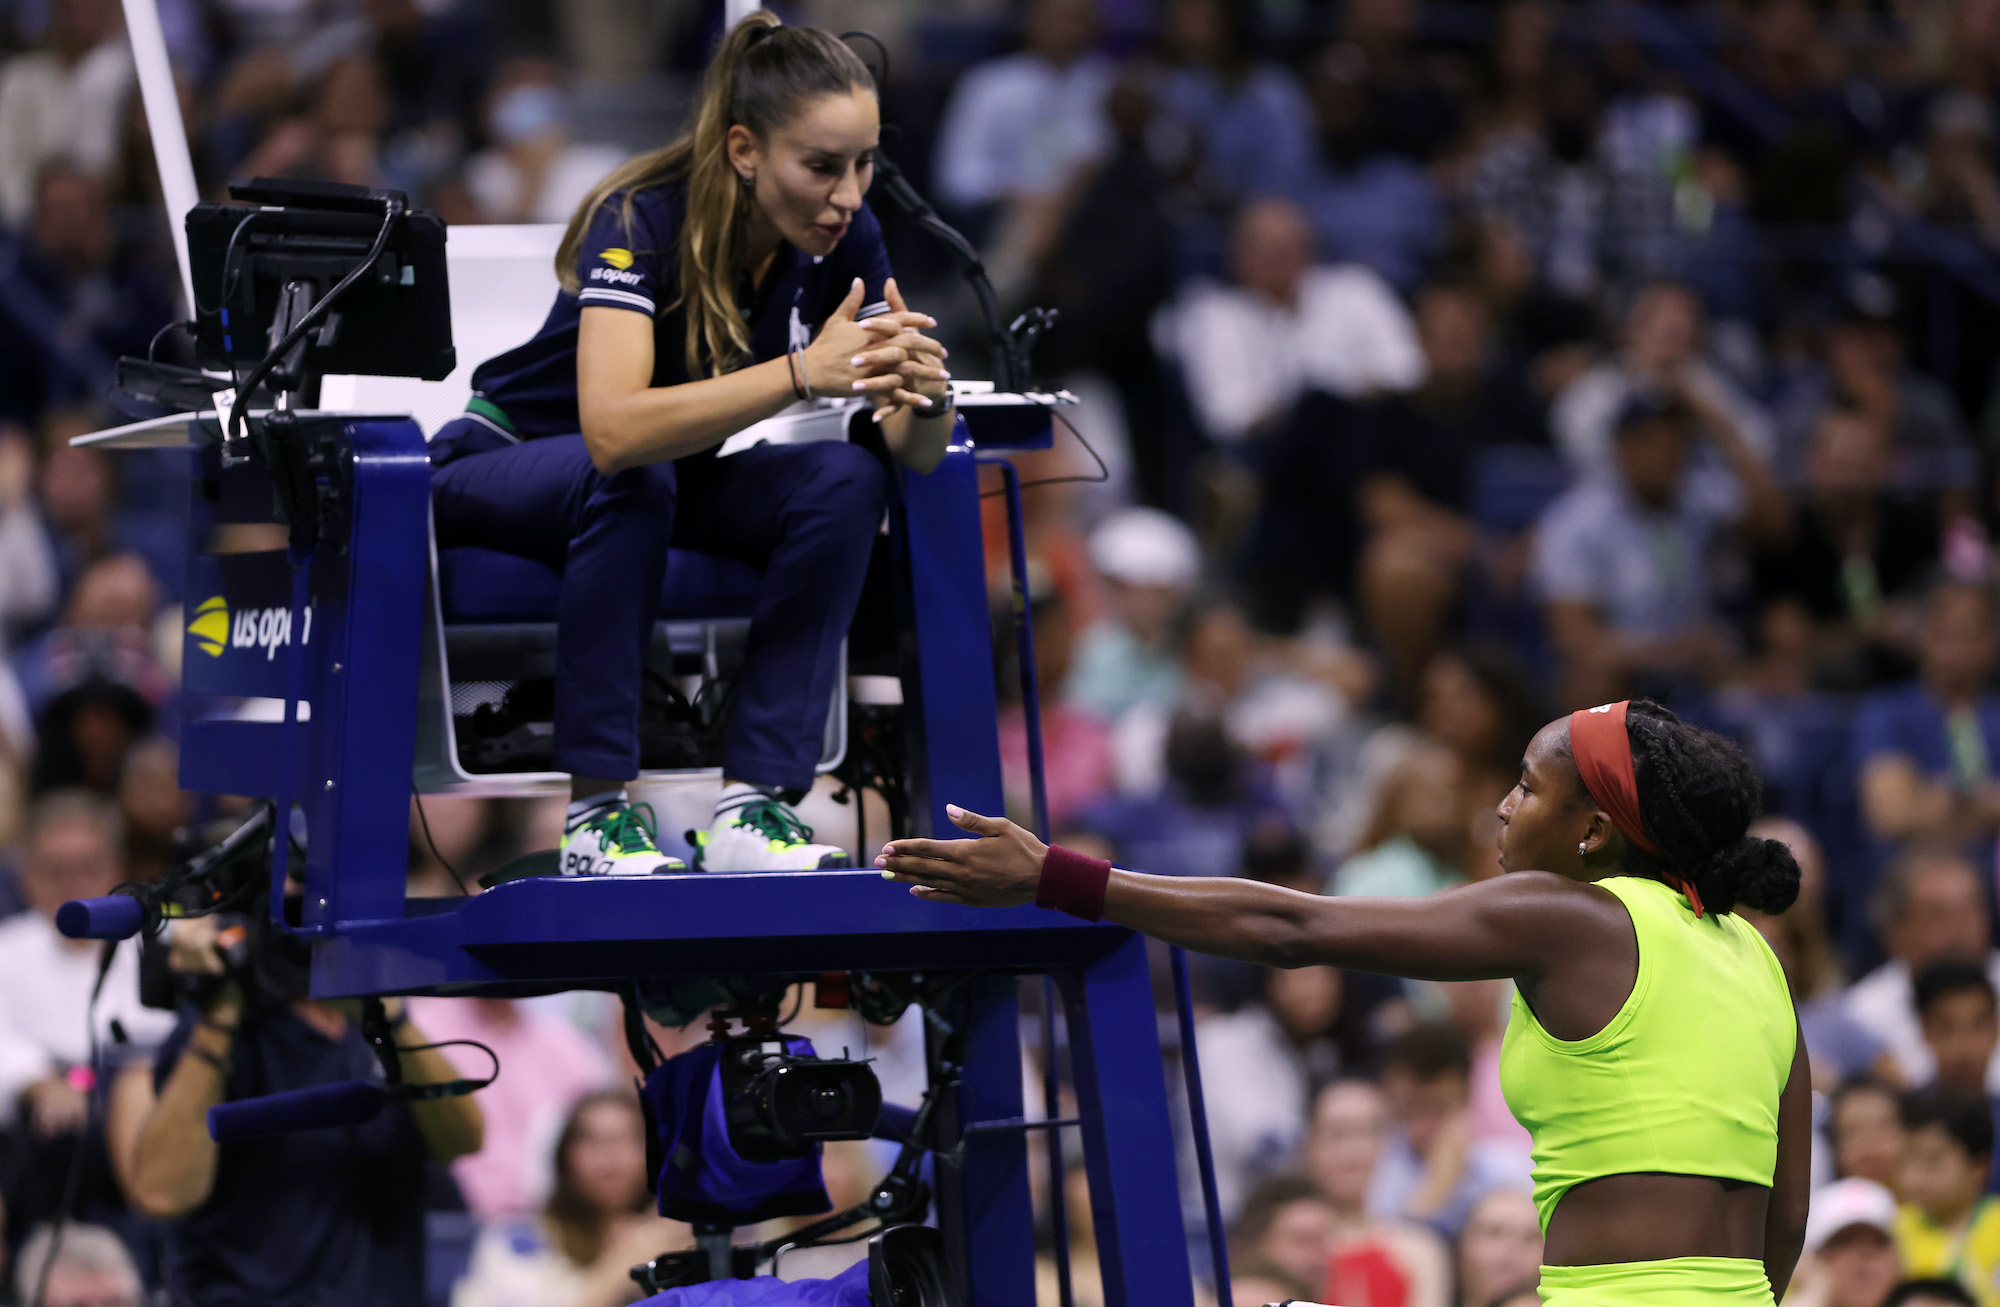 Coco Gauff tells umpire Marijana Veljovic to call a time violation against her opponent, Laura Siegemund, at the U.S. Open